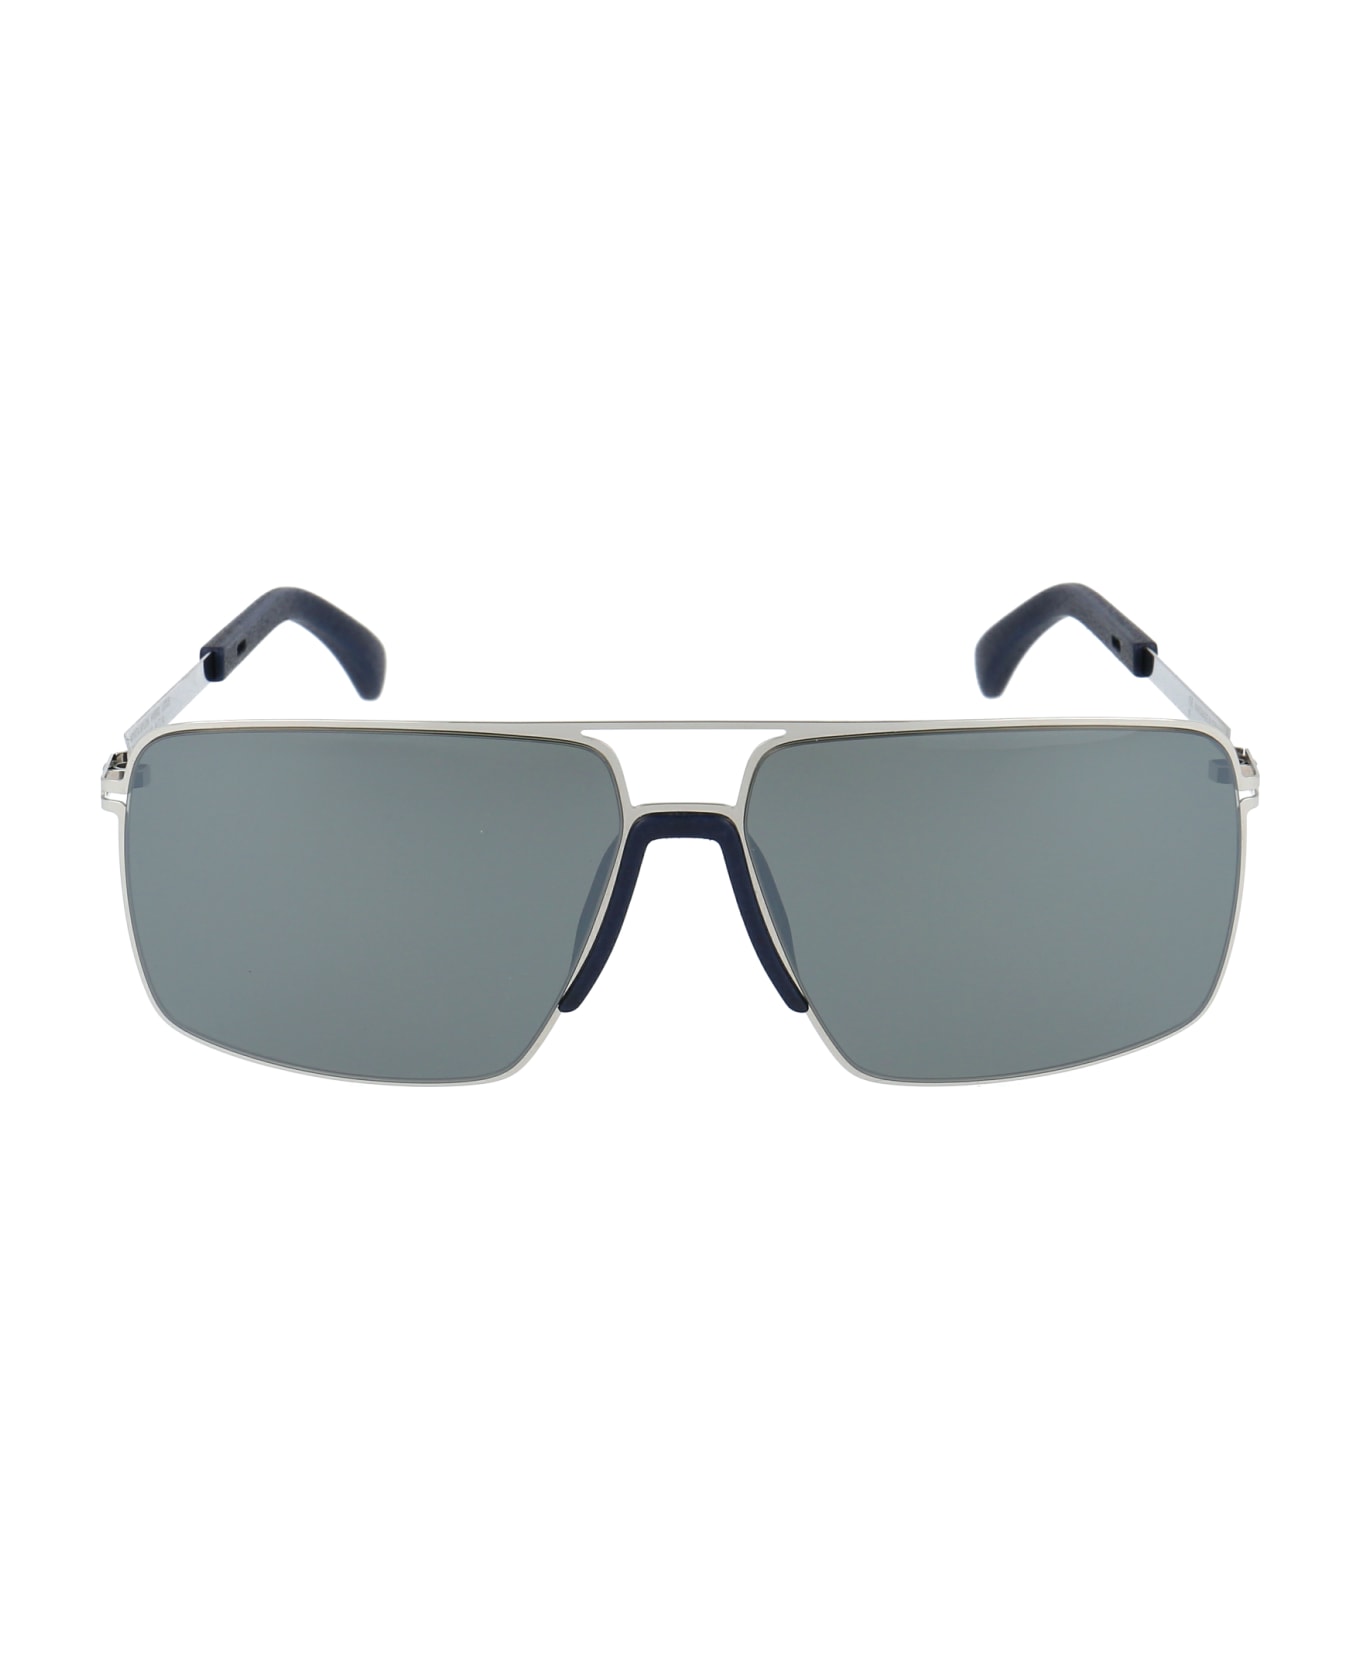 Mykita Lotus Sunglasses - 309 MH10 Navy Blue/Shiny Silver Light Silver Flash